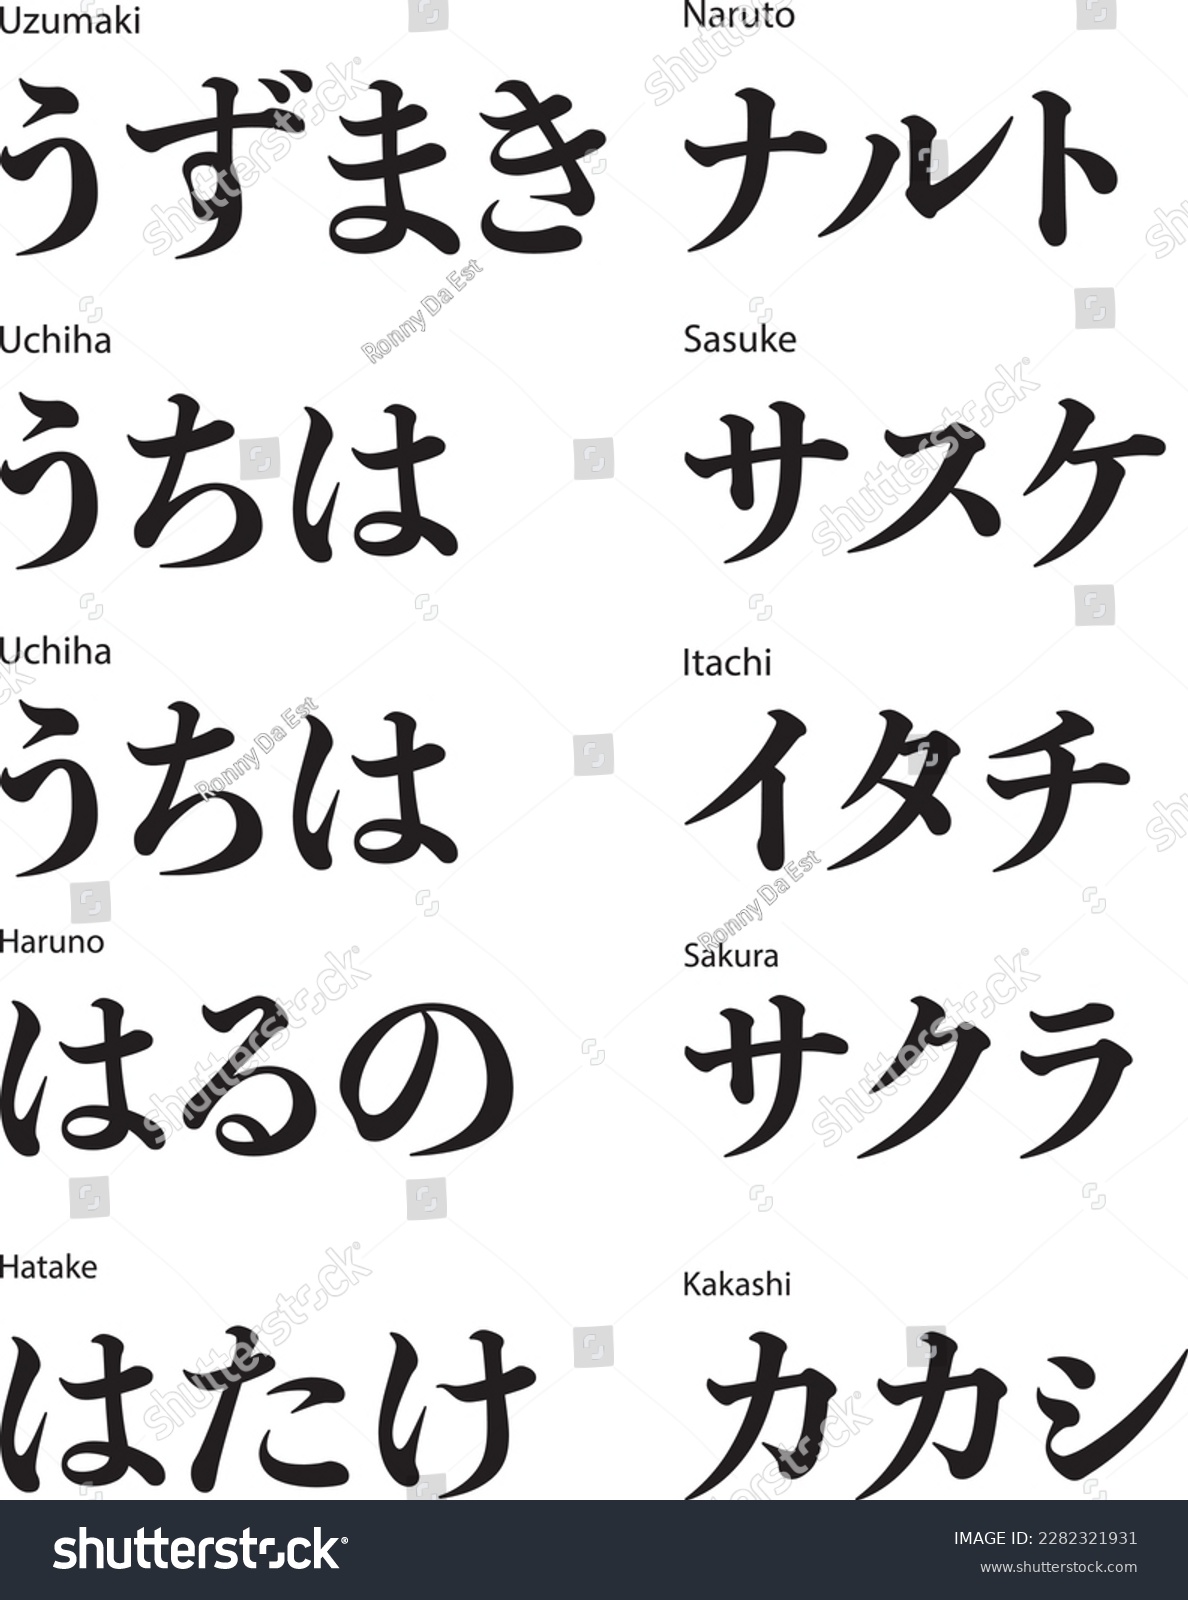 SVG of Naruto characters' names in kanji, katakana, hiragana, foreign language, anime characters name, typography, calligraphy  svg